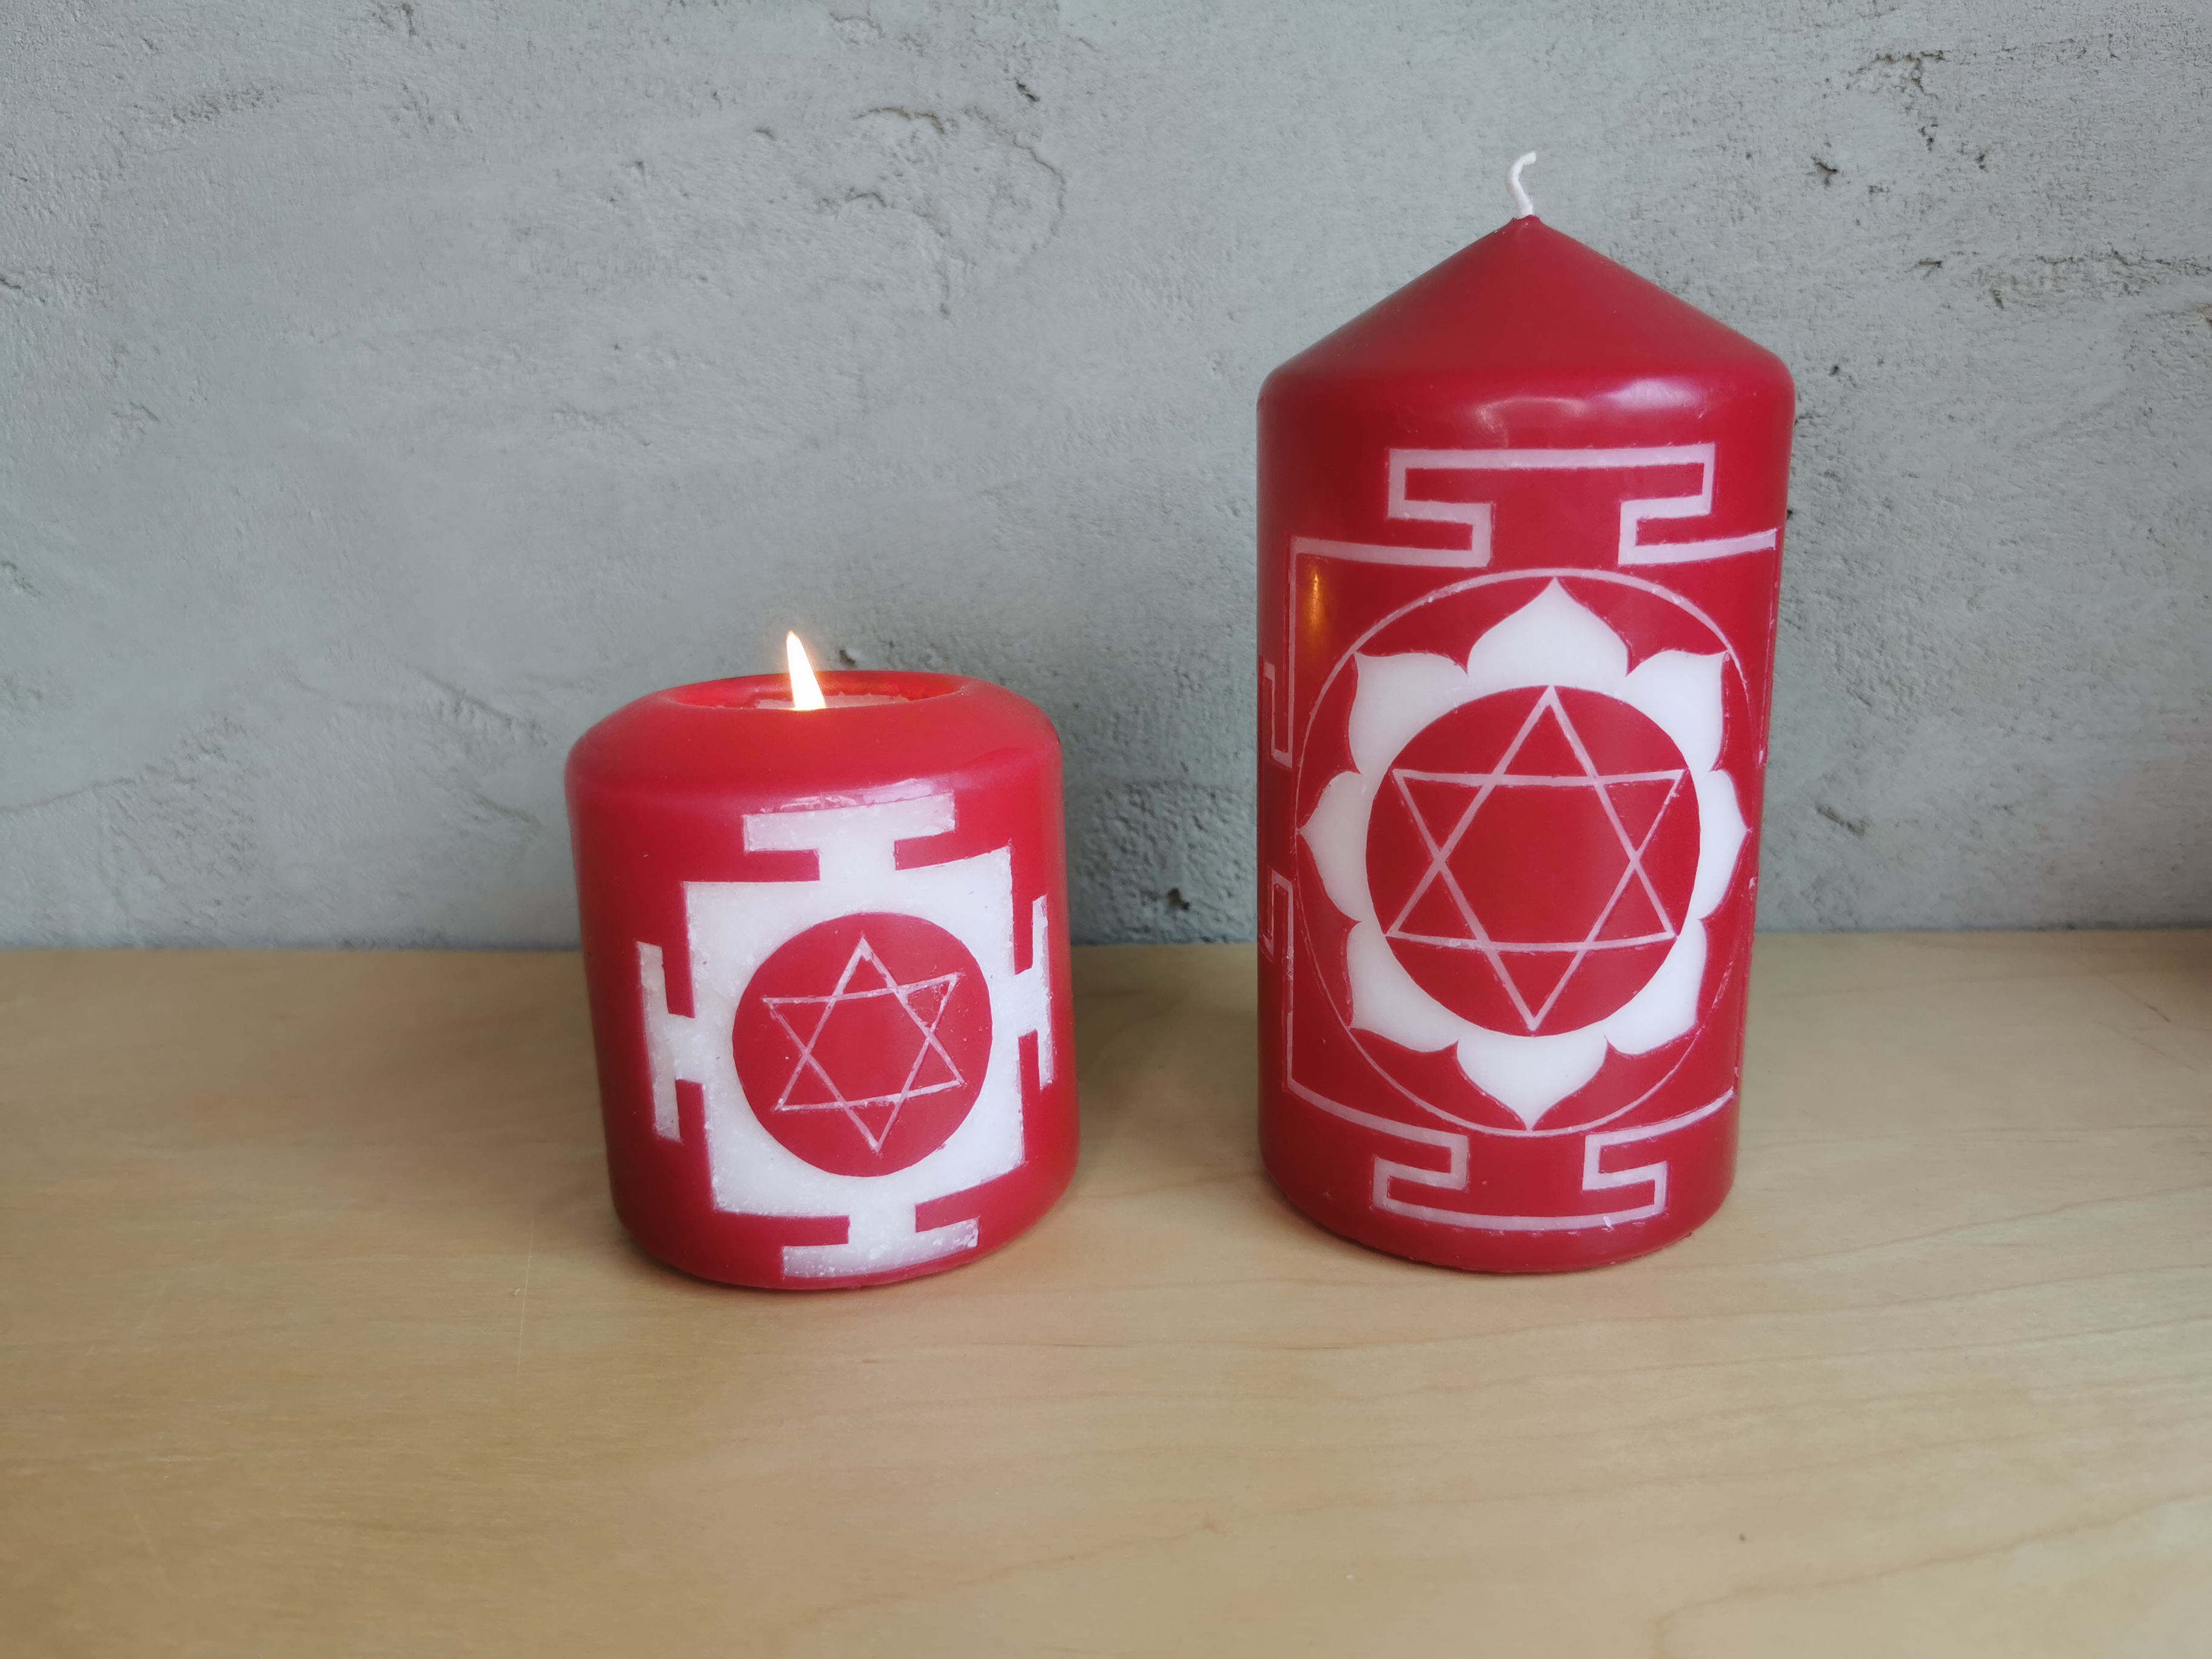 Ritual und Meditations- Kerze - das Feuer entzünden